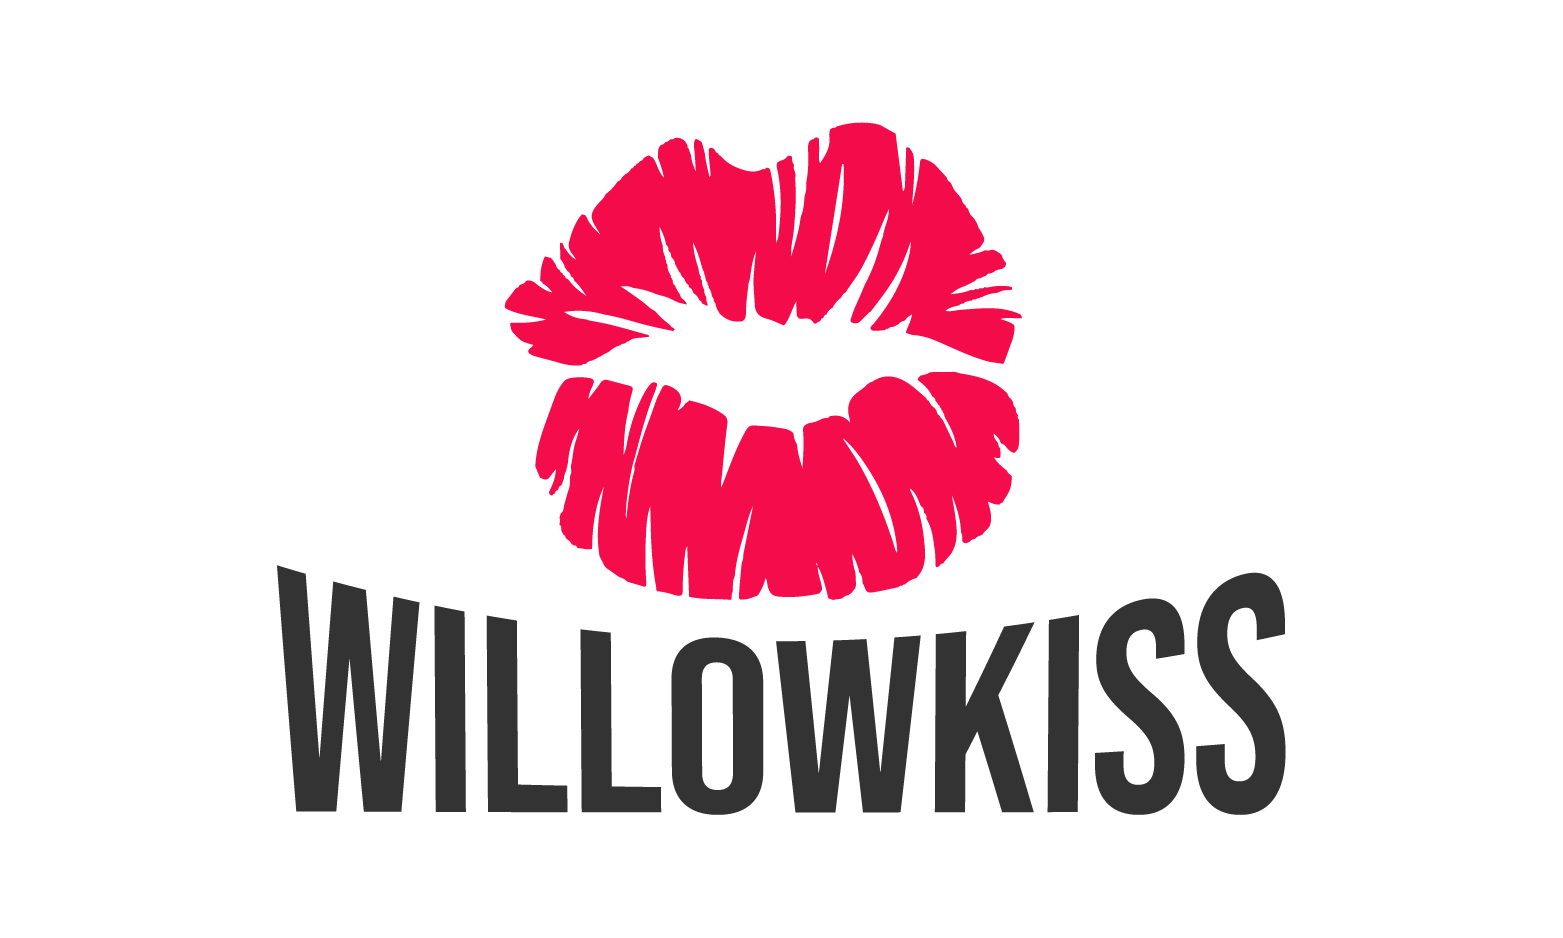 WillowKiss.com - Creative brandable domain for sale